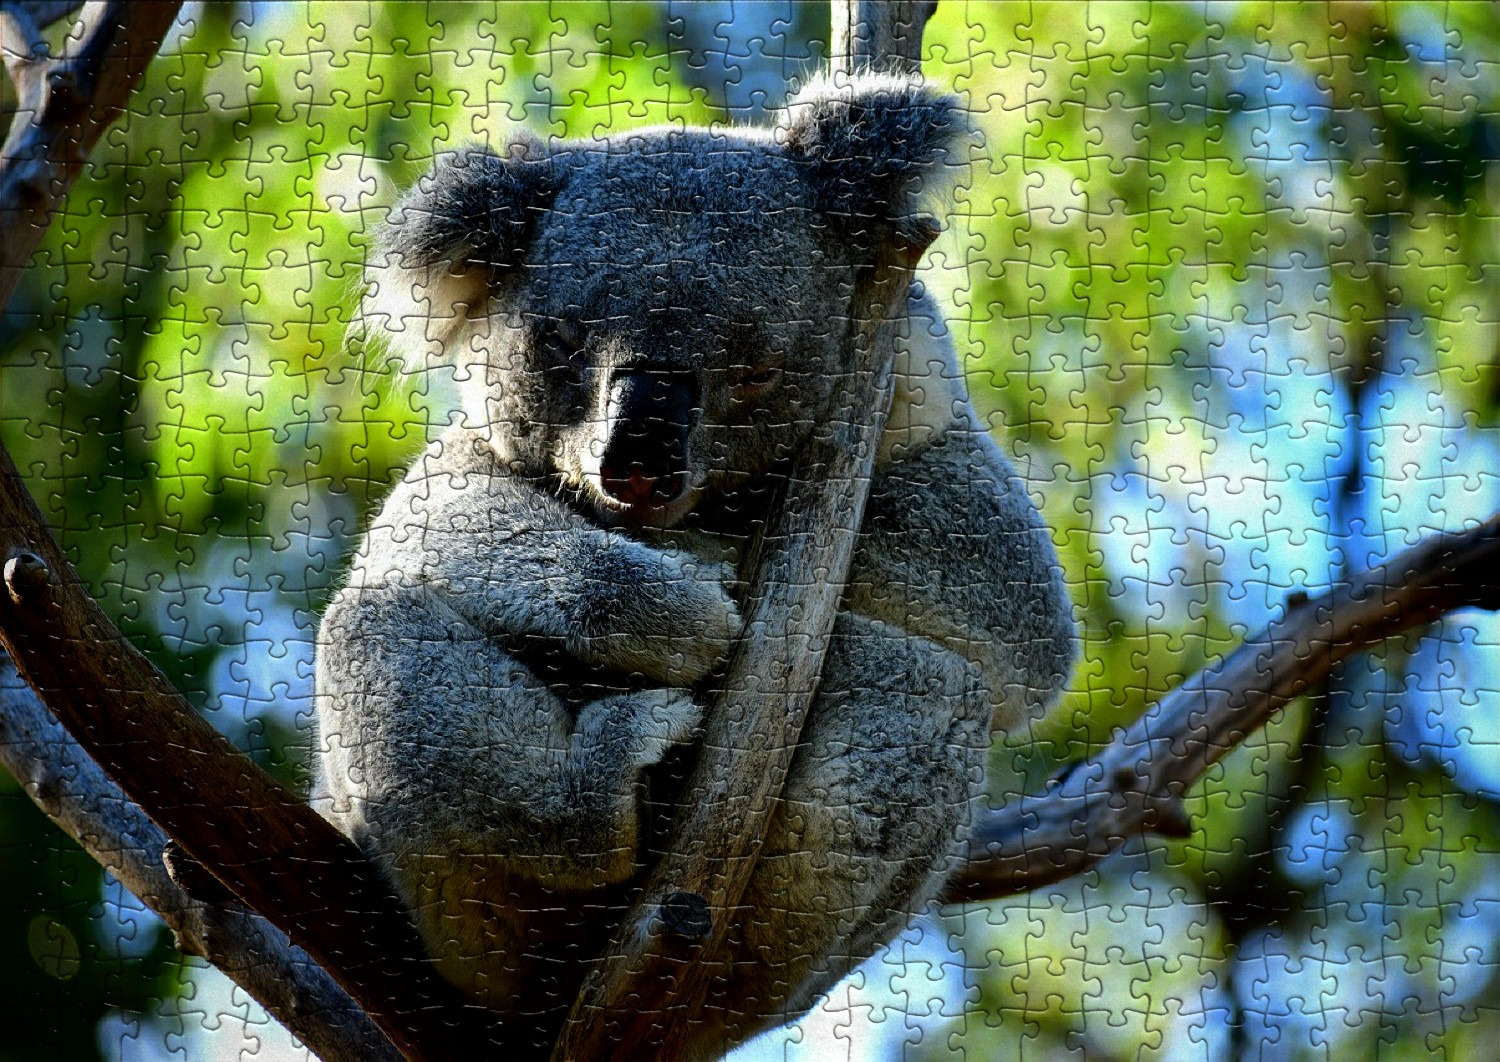 Les koalas en puzzles